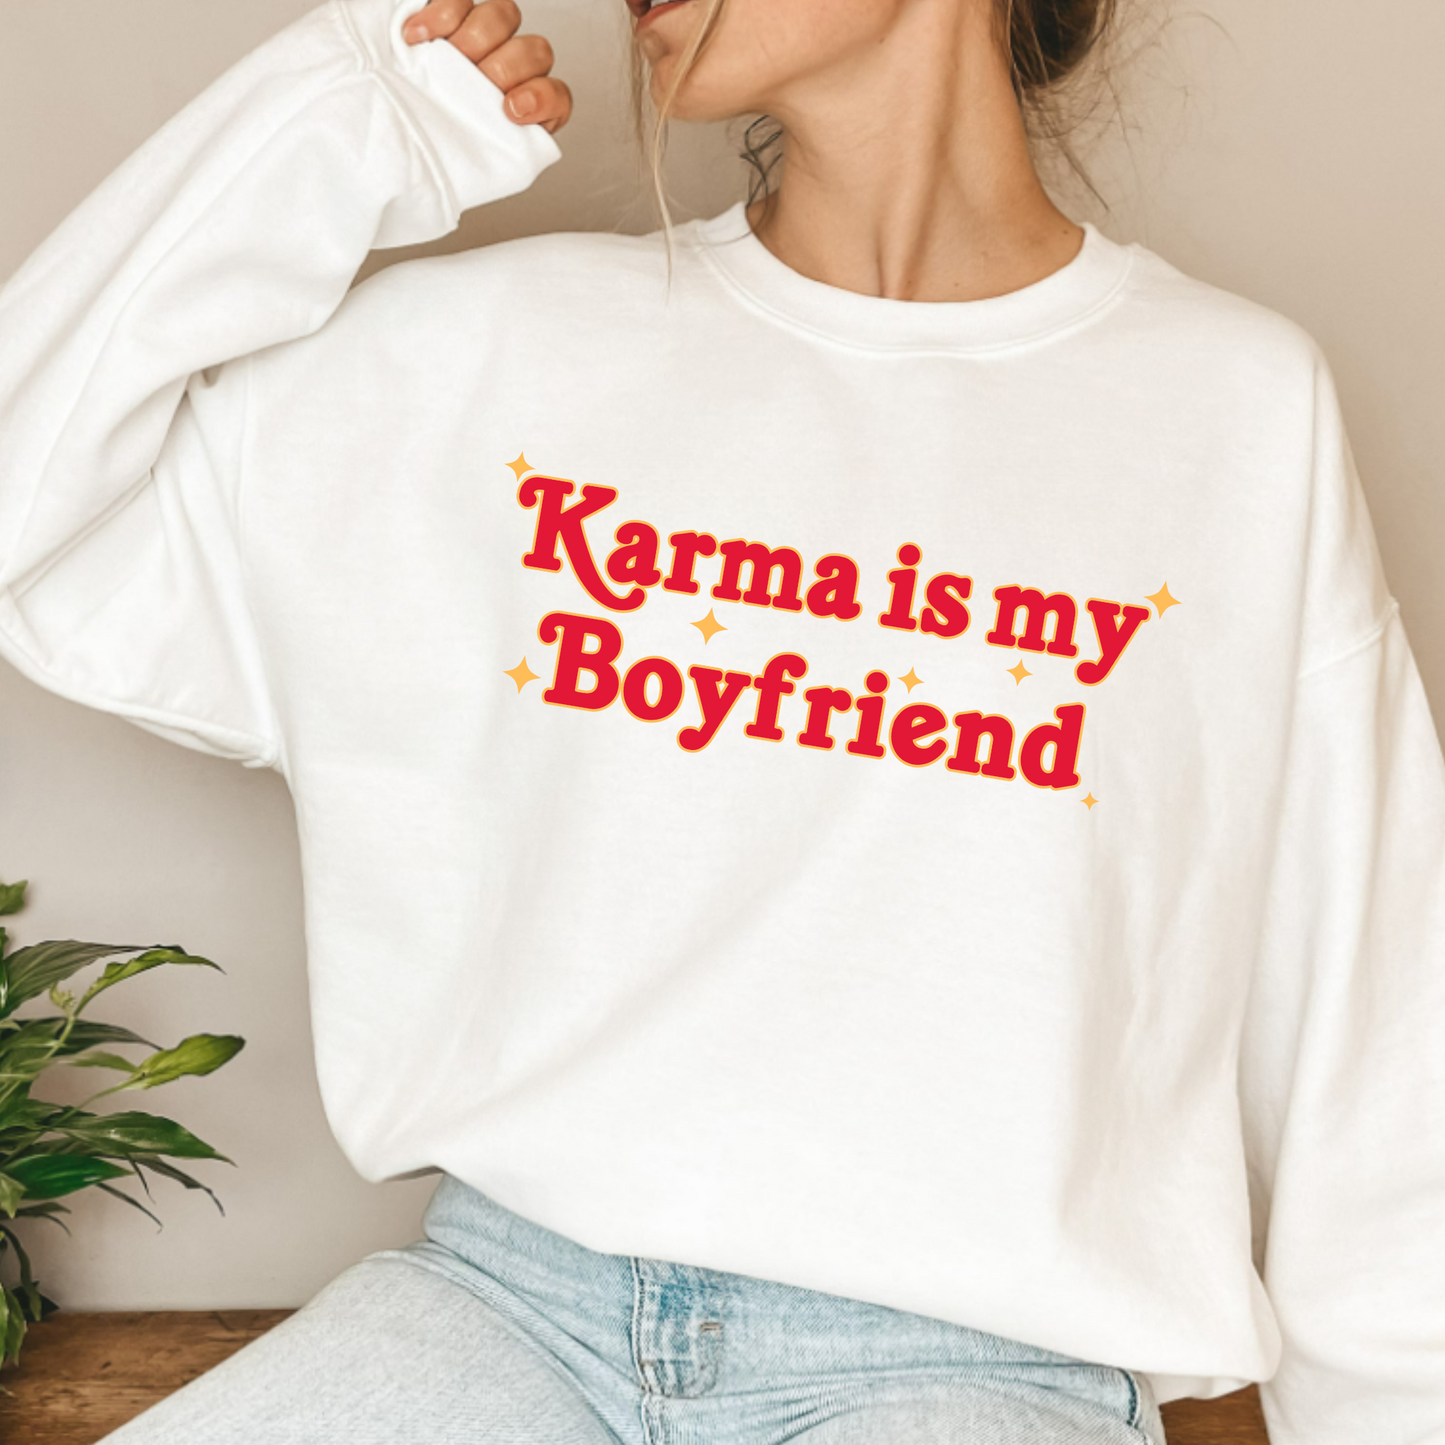 (Shirt not Included) Karma is my Boyfriend   - CLEAR FILM Transfer